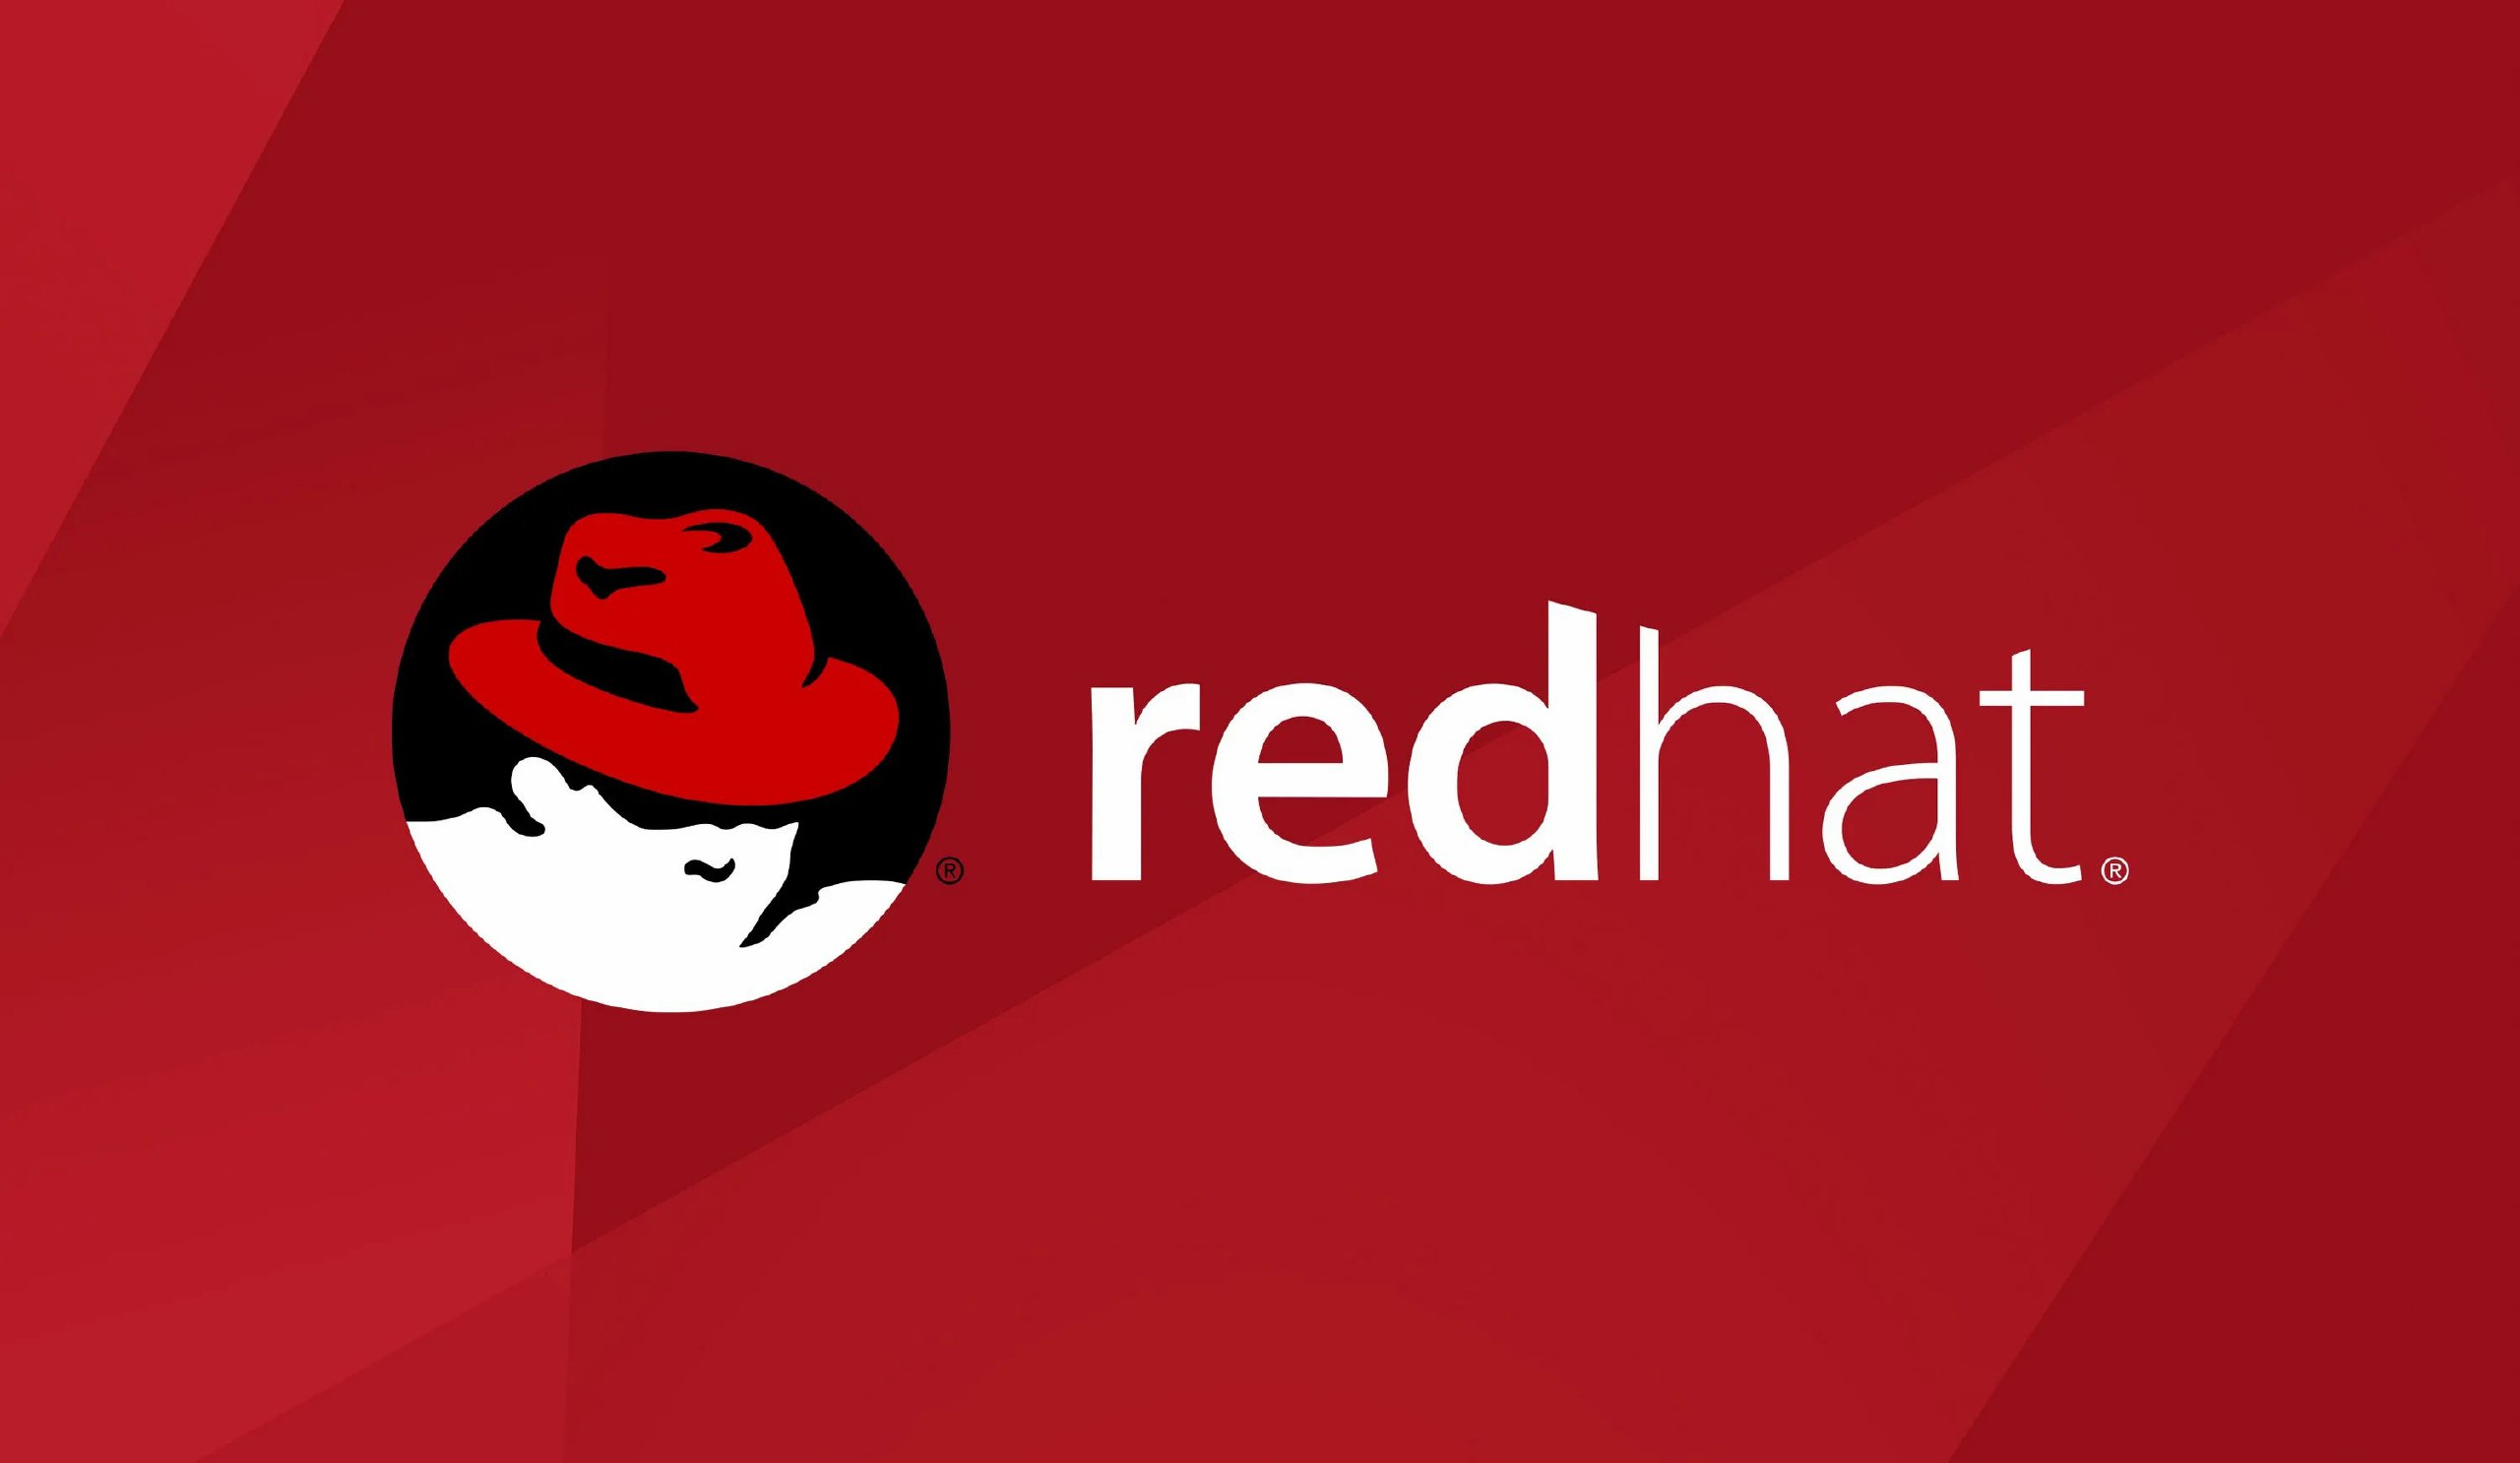 Ред хат. Ред хат линукс. Red hat Enterprise Linux. Red hat логотип. Red hat Enterprise Linux 7.